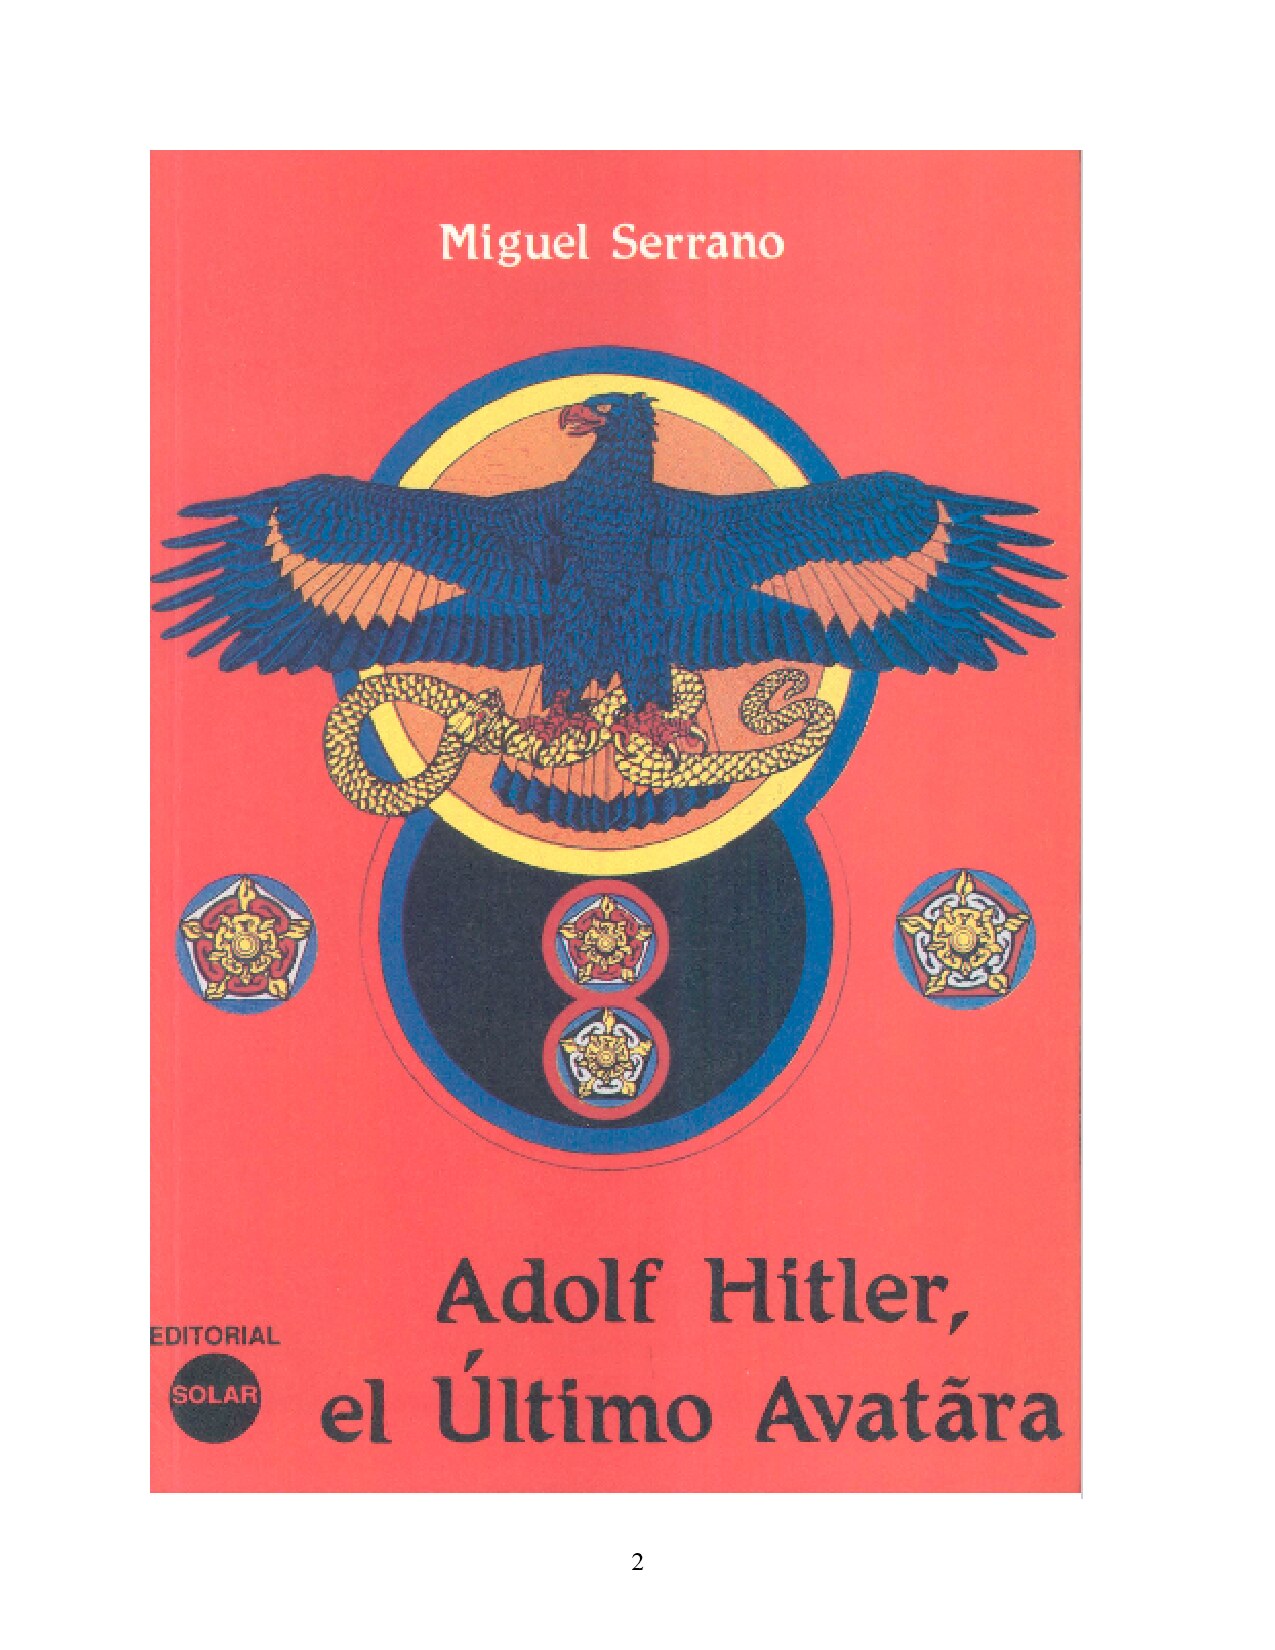 Serrano,, Miguel; Adolf Hitler - The Ultimate Avatar